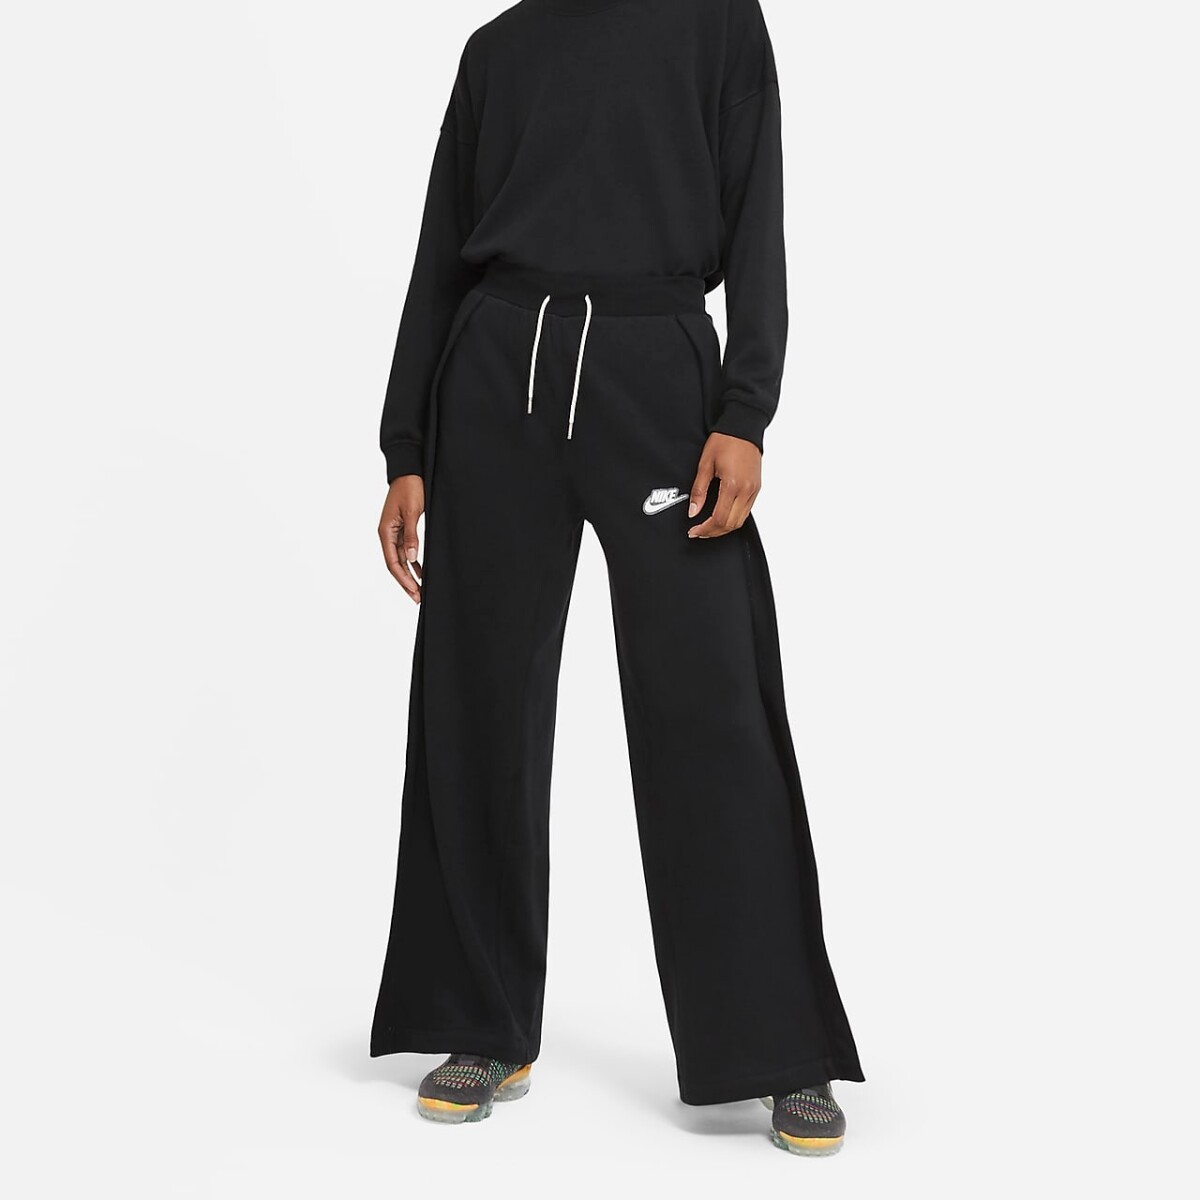 Pantalon Nike moda dama EARTH DAY BLACK/BLACK/(WHITE) - Color Único 